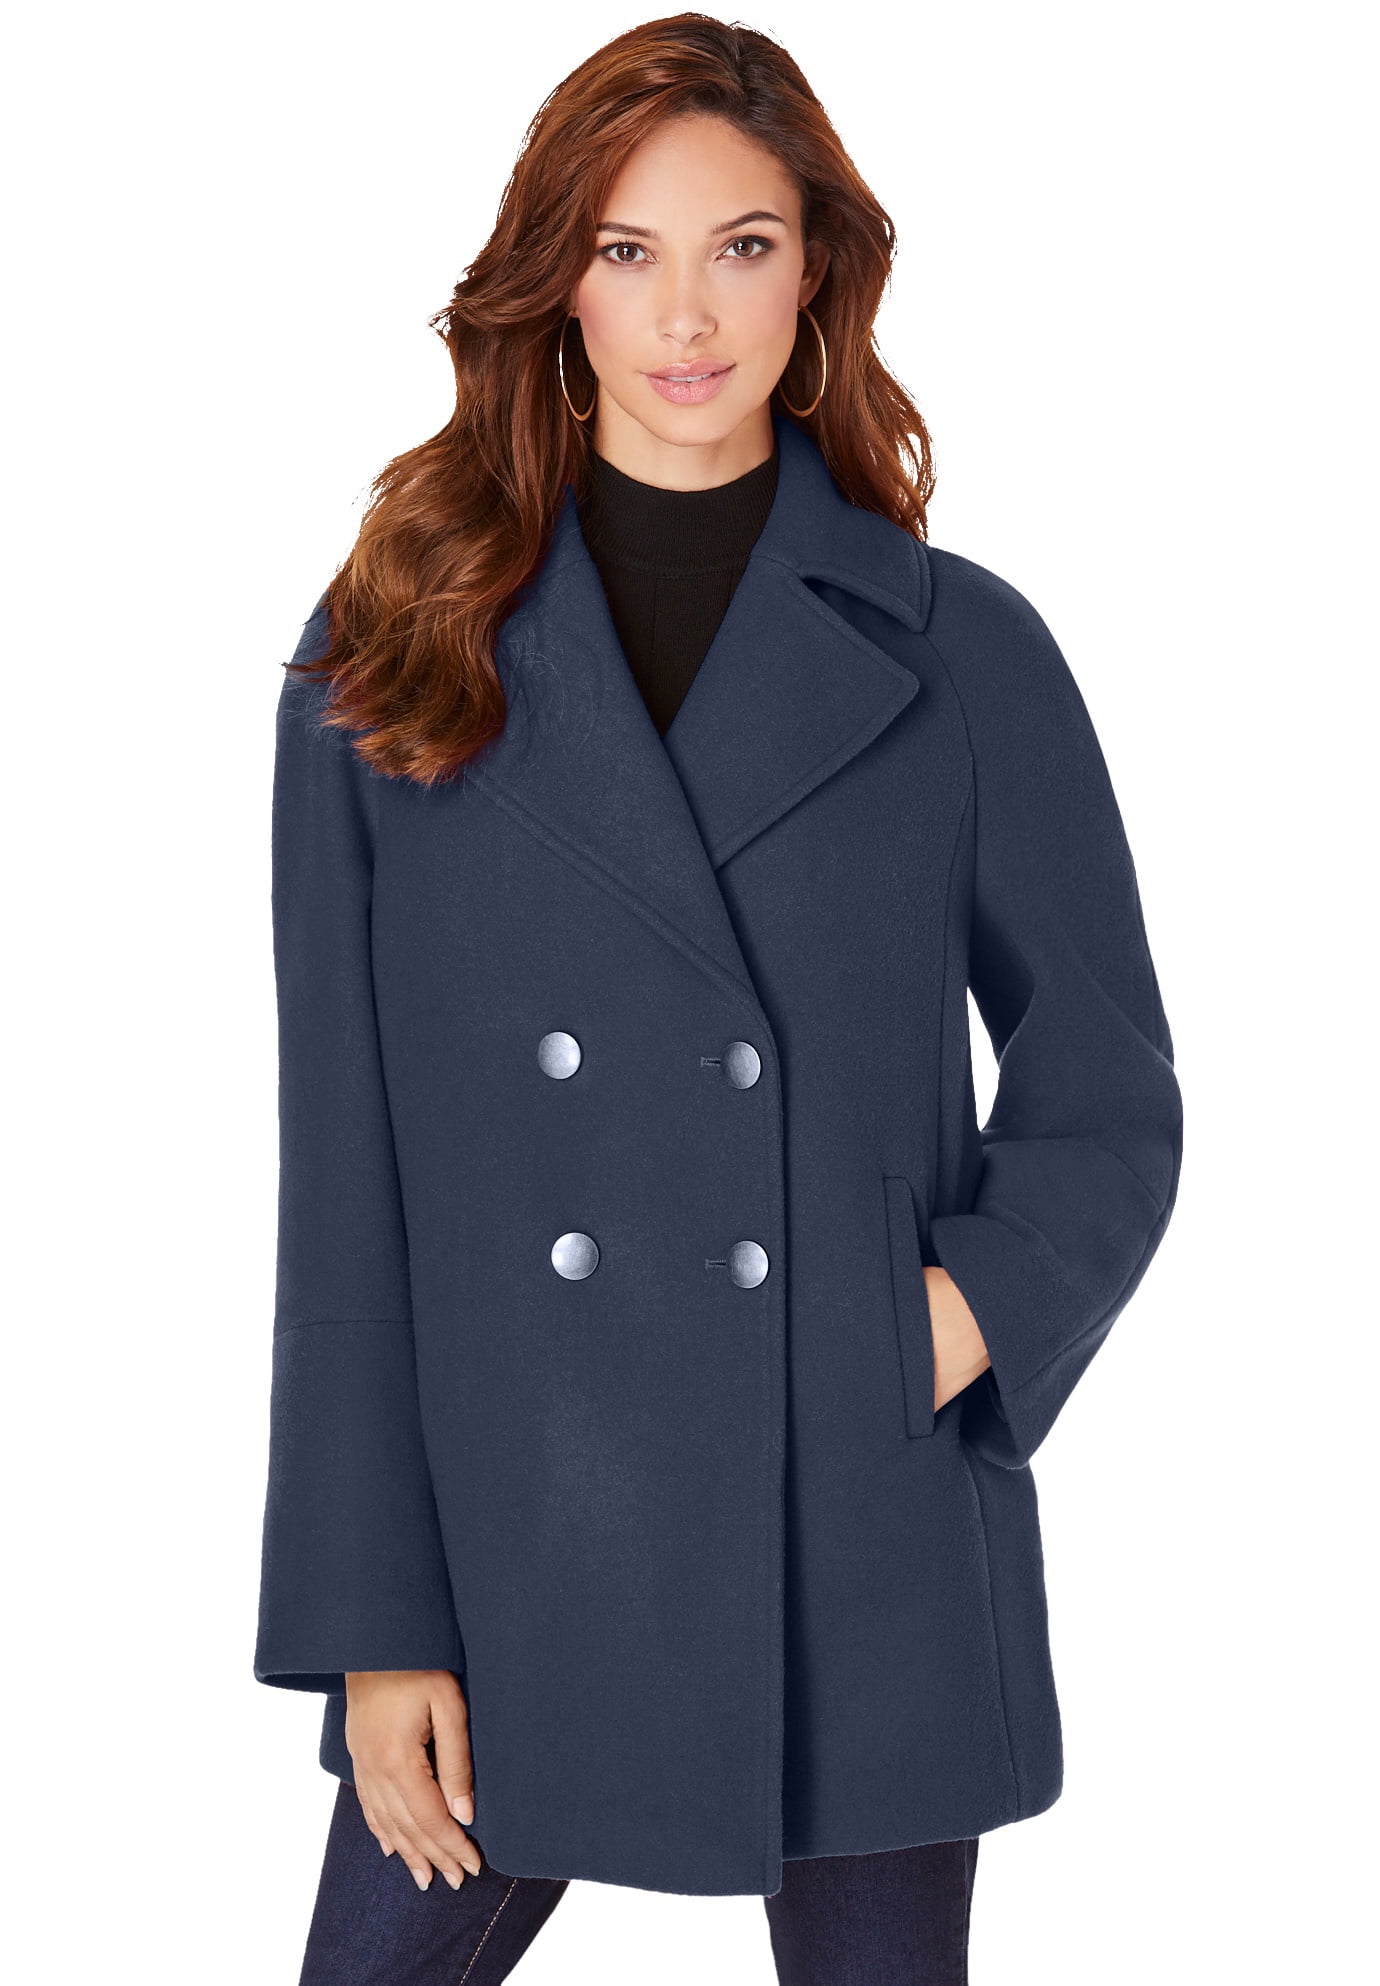 Roaman's Women's Plus Size Modern A-Line Peacoat Wool Coat Walmart.com